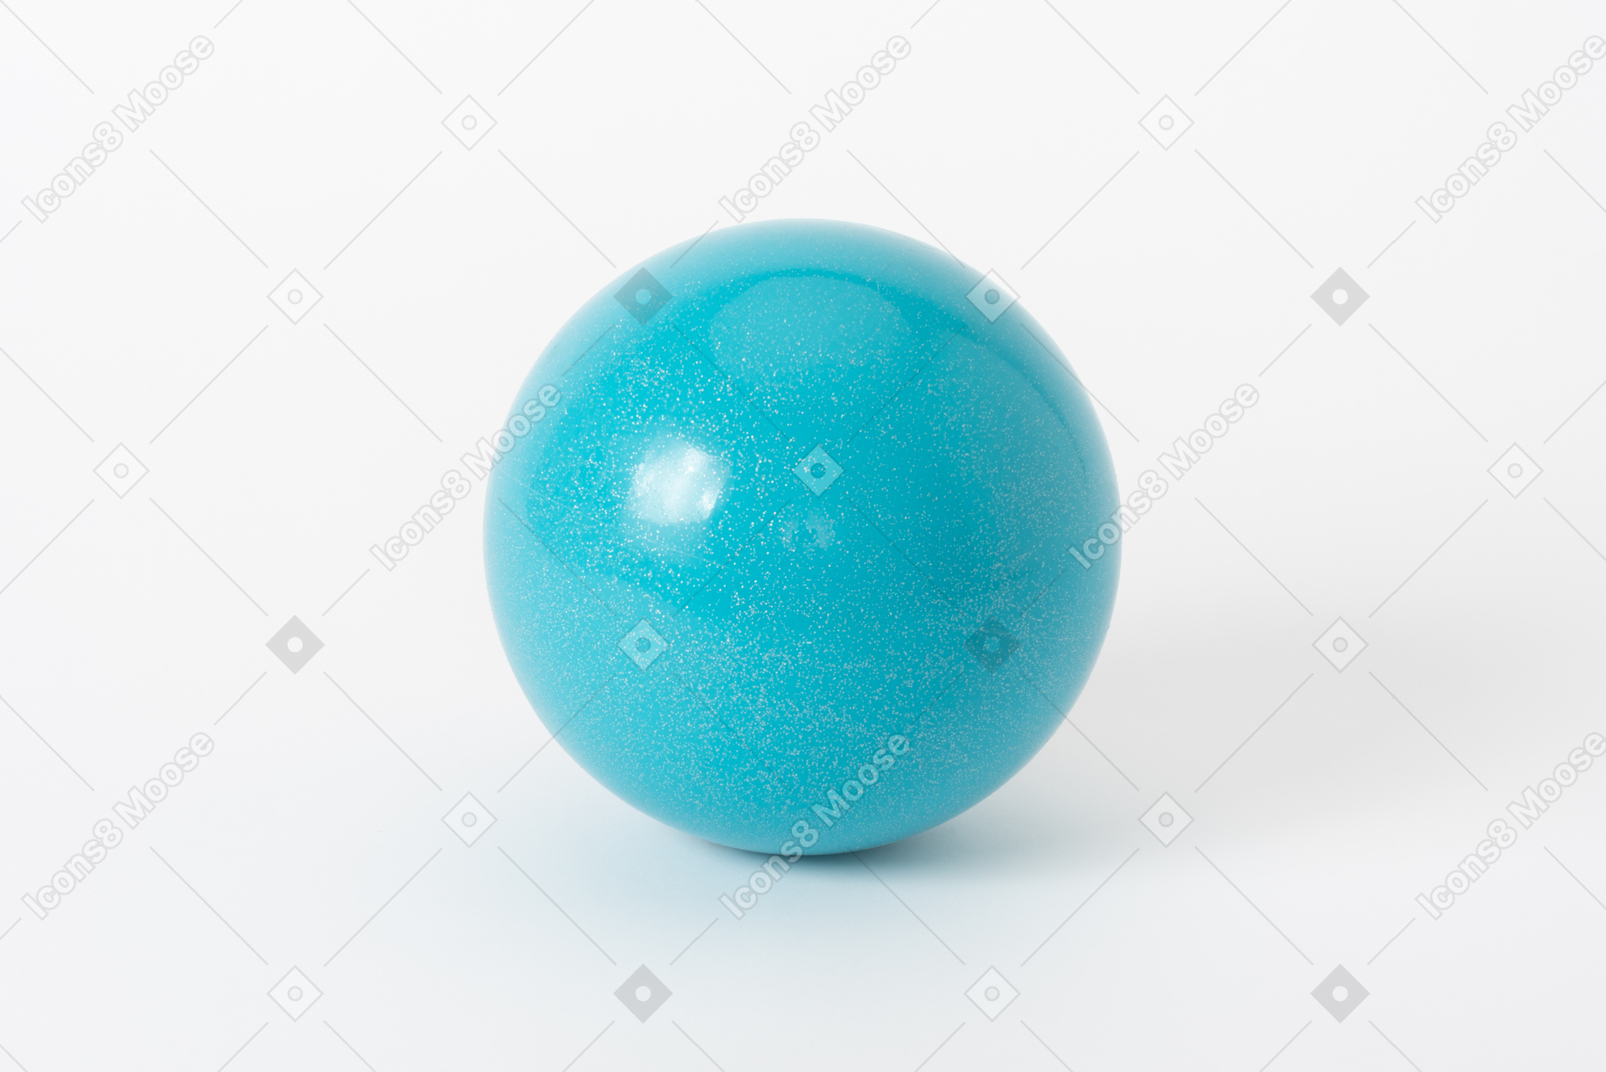 Palla blu